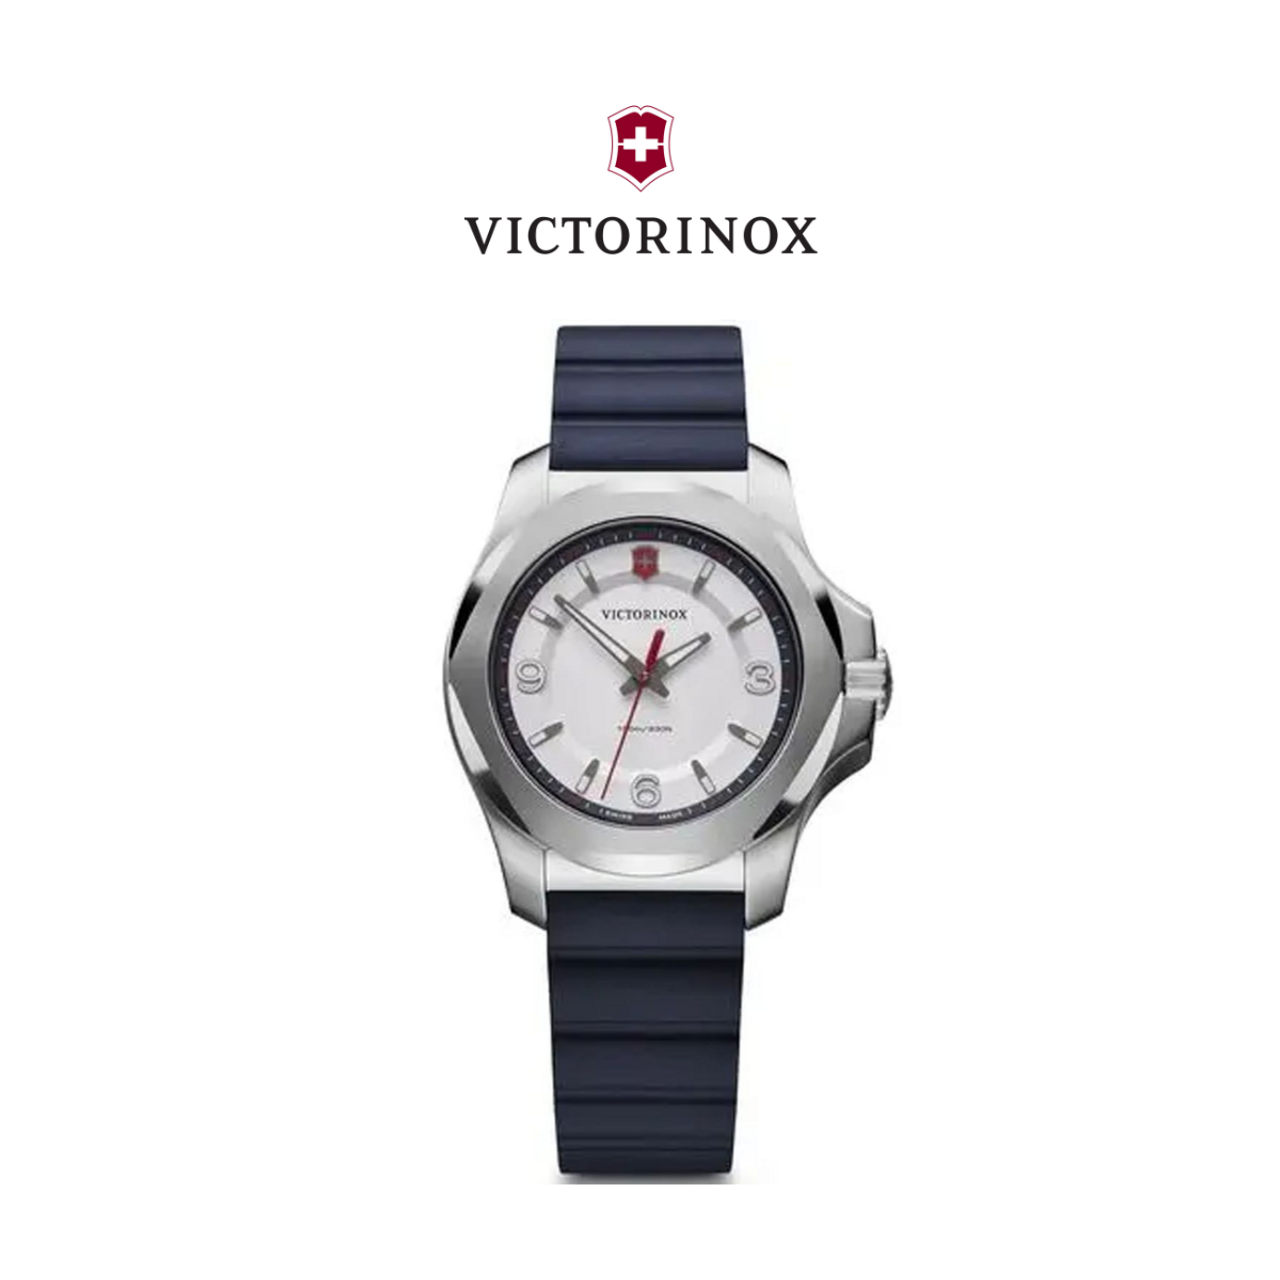 Victorinox Men's Fieldforce Black Dial Watch product image